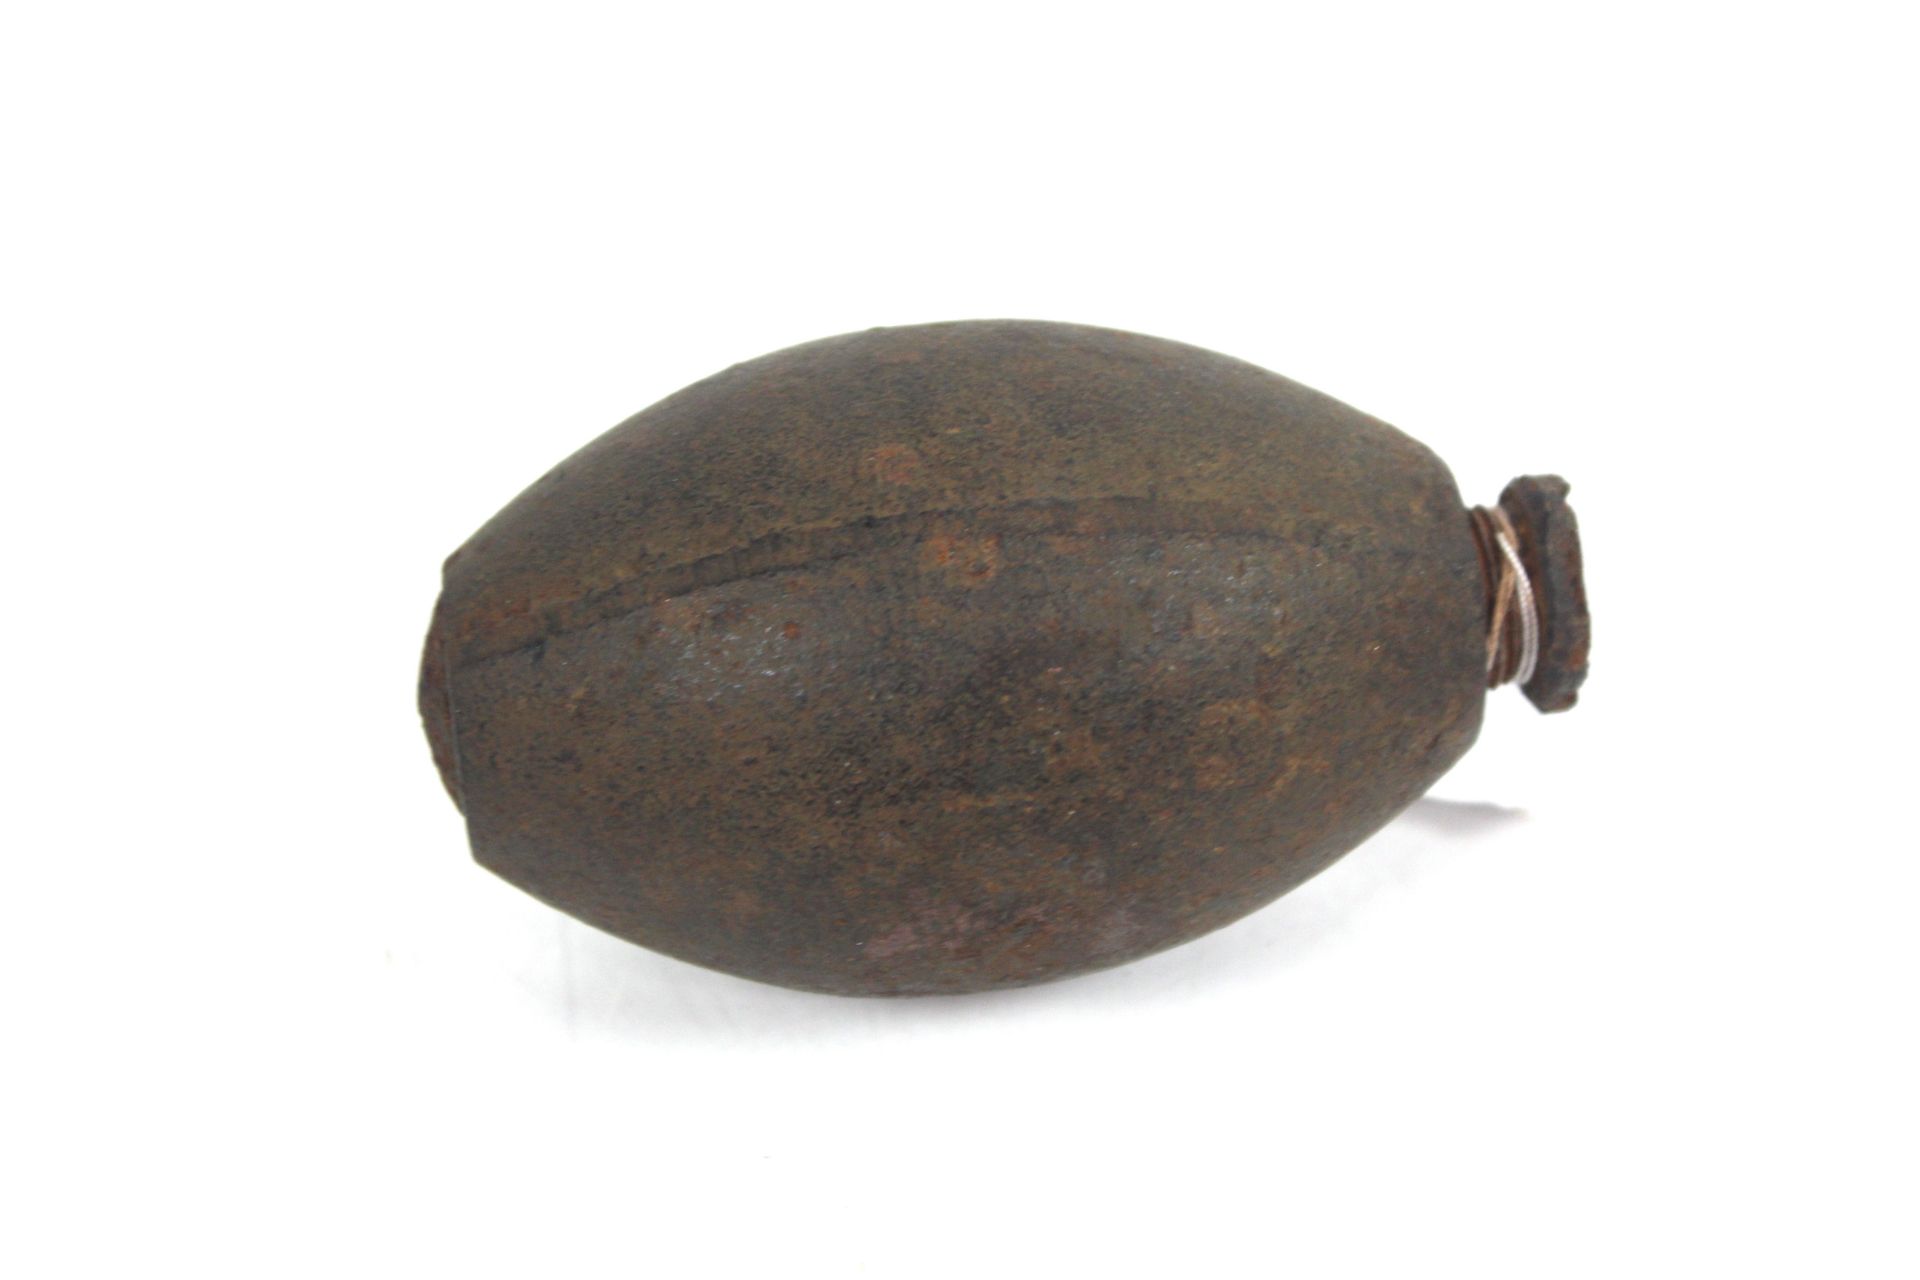 An inert British WWI era No.16 (Lemon) grenade dat - Image 2 of 3